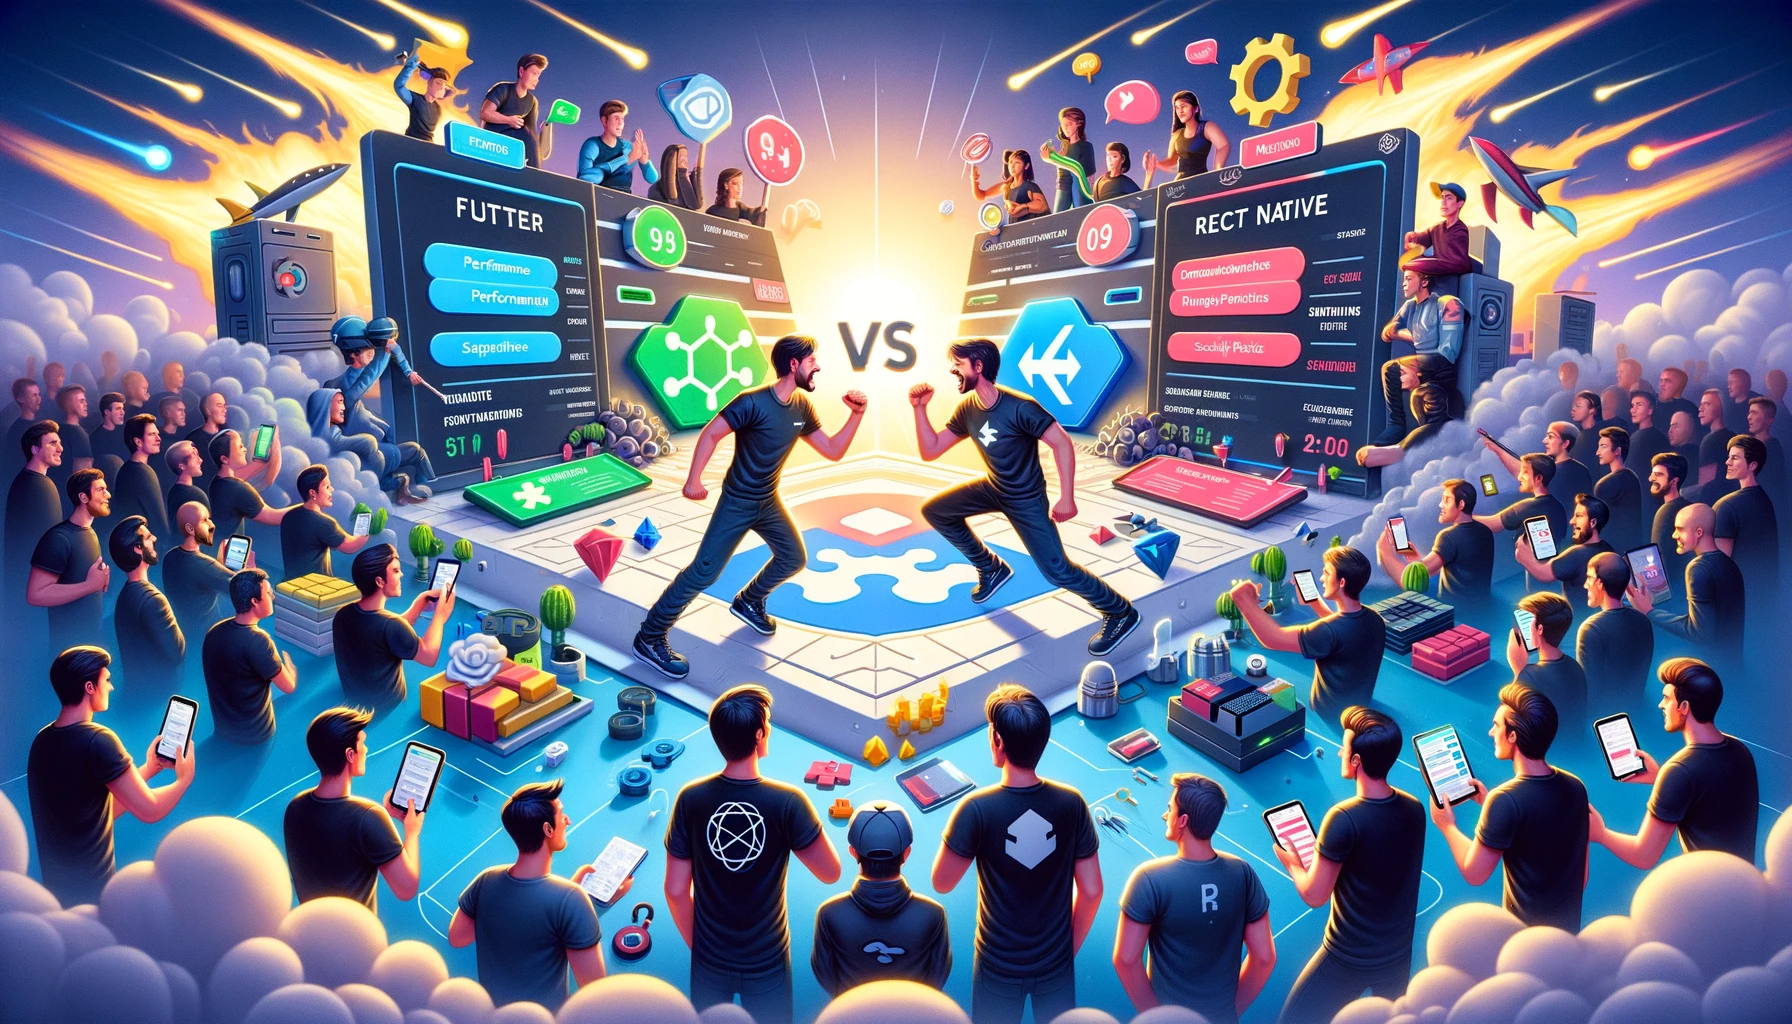  Flutter מול React Native - מי ינצח במירוץ לפיתוח אפליקציות רב-מכשיריות?